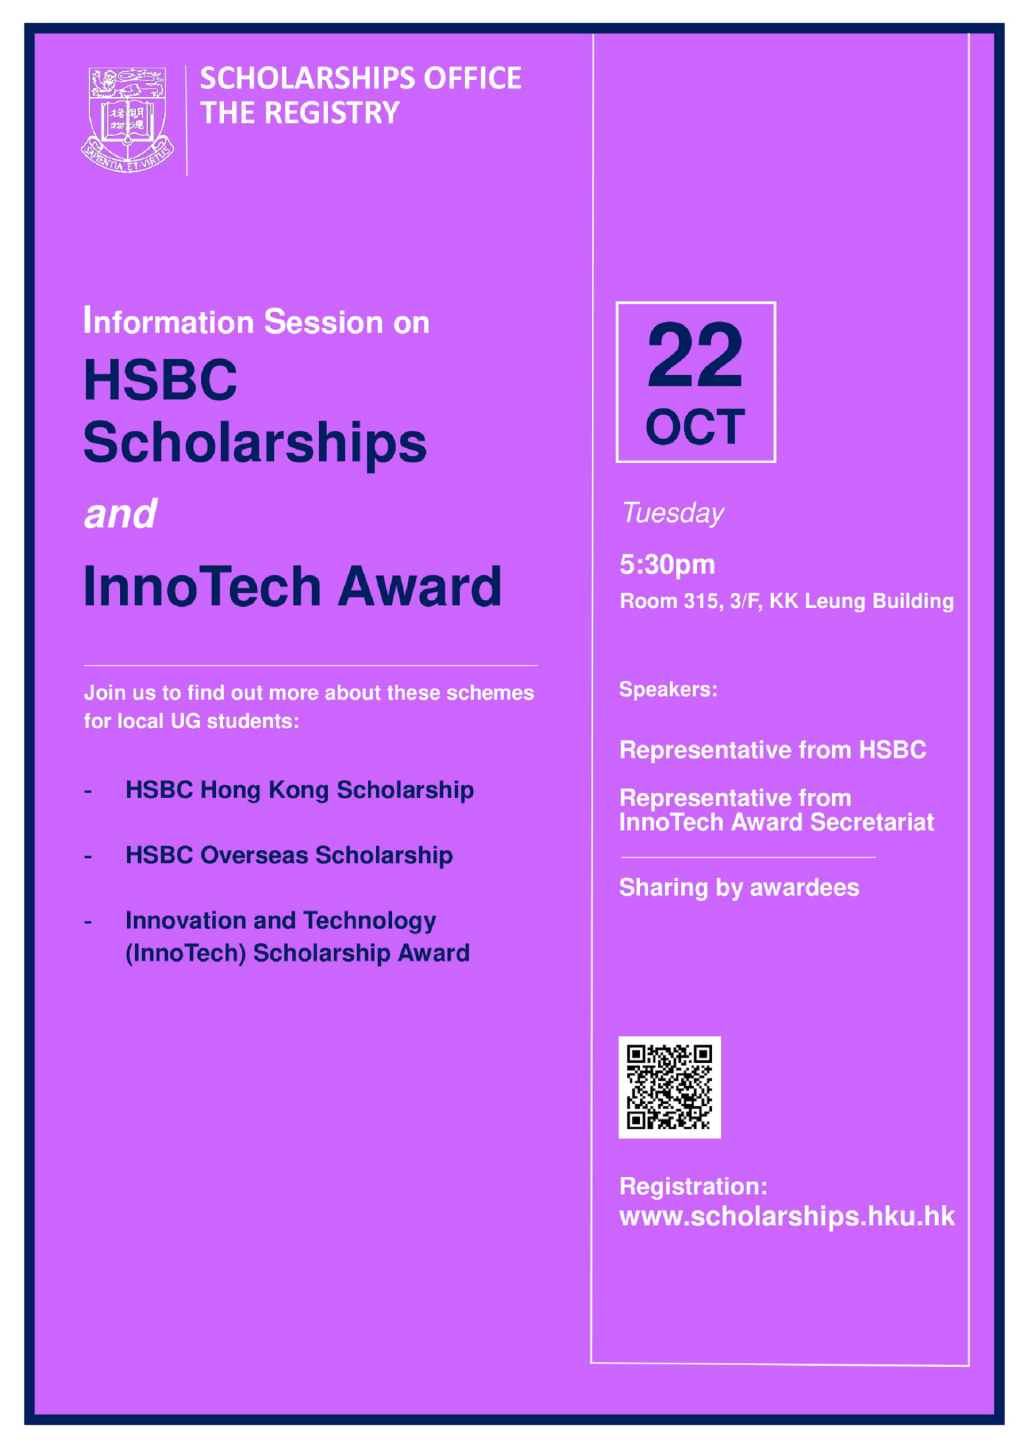 HSBC Scholarships and InnoTech Award